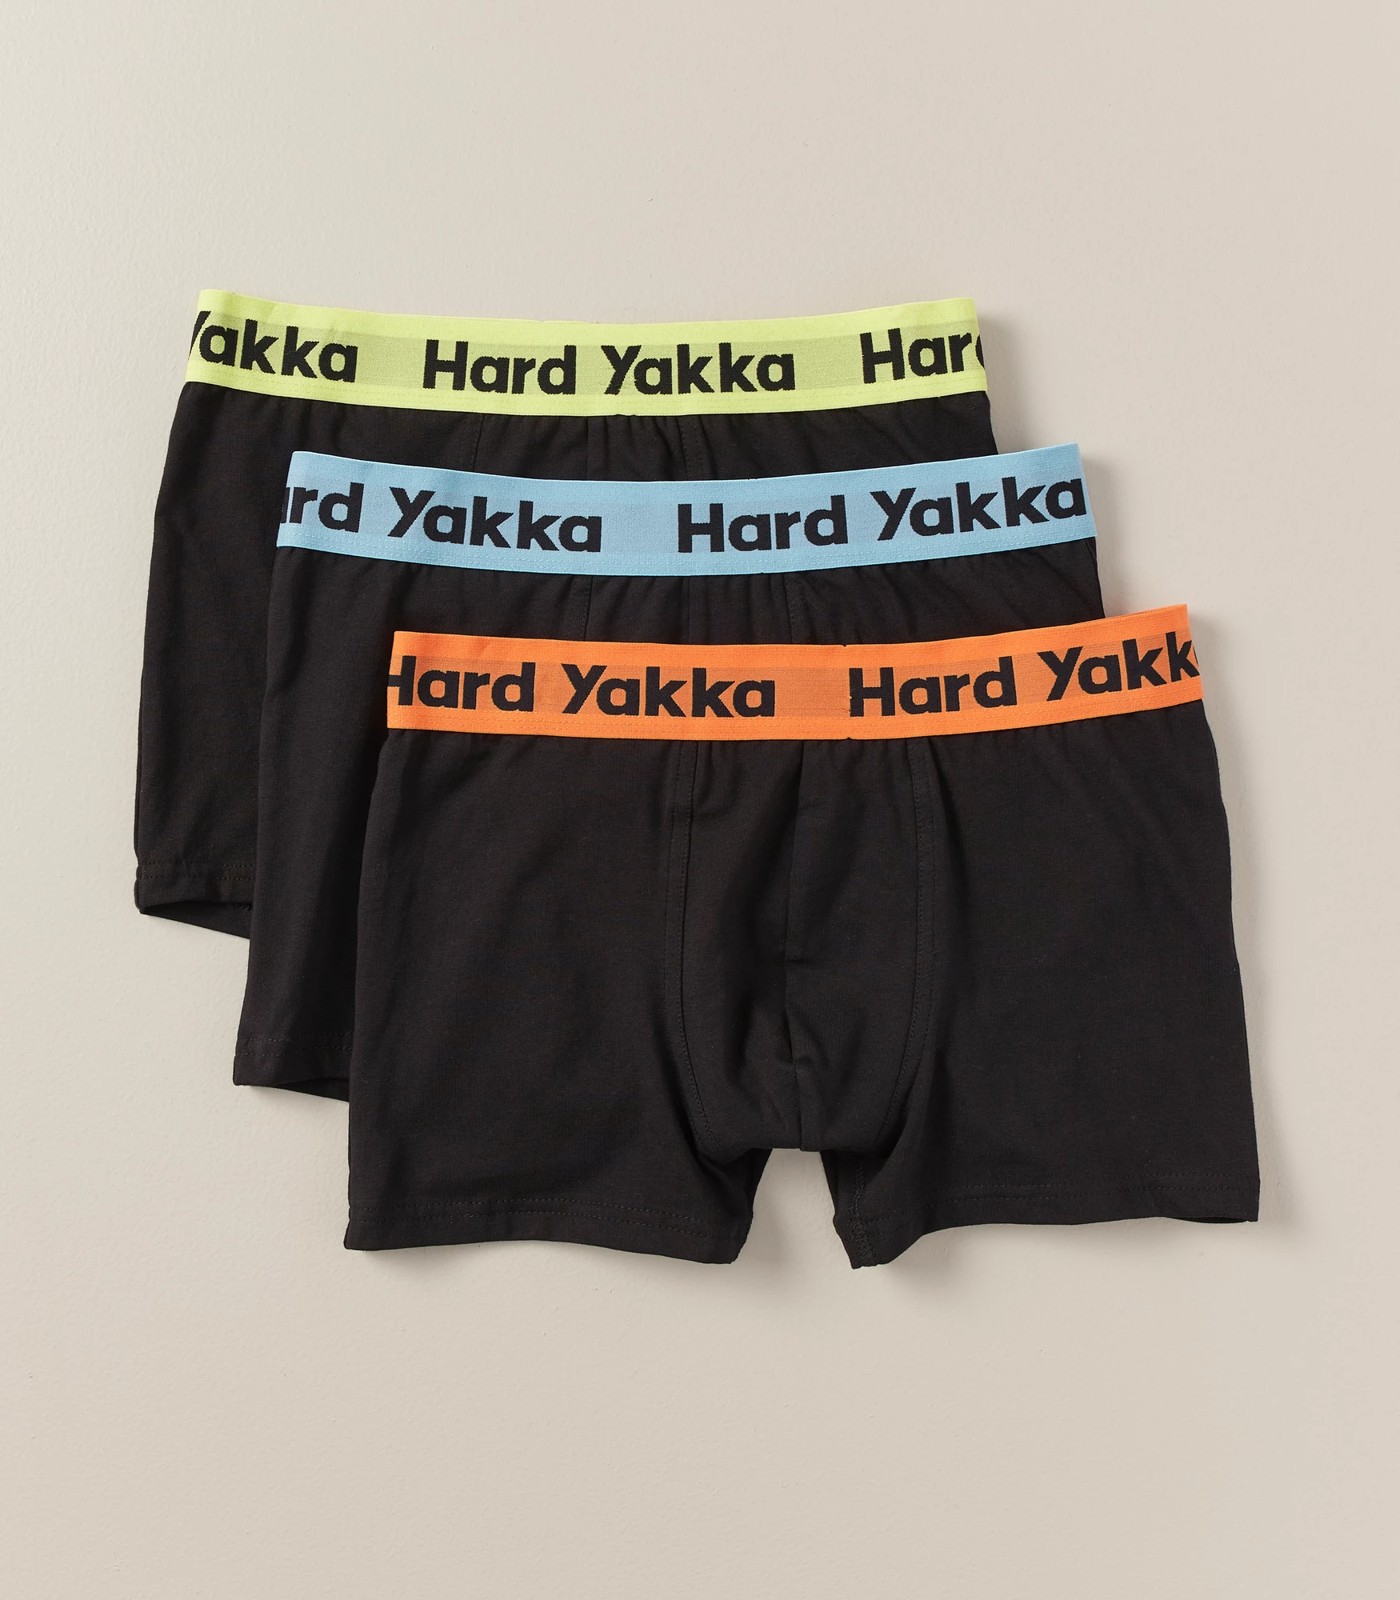 Hard Yakka 3 Pack Trunks